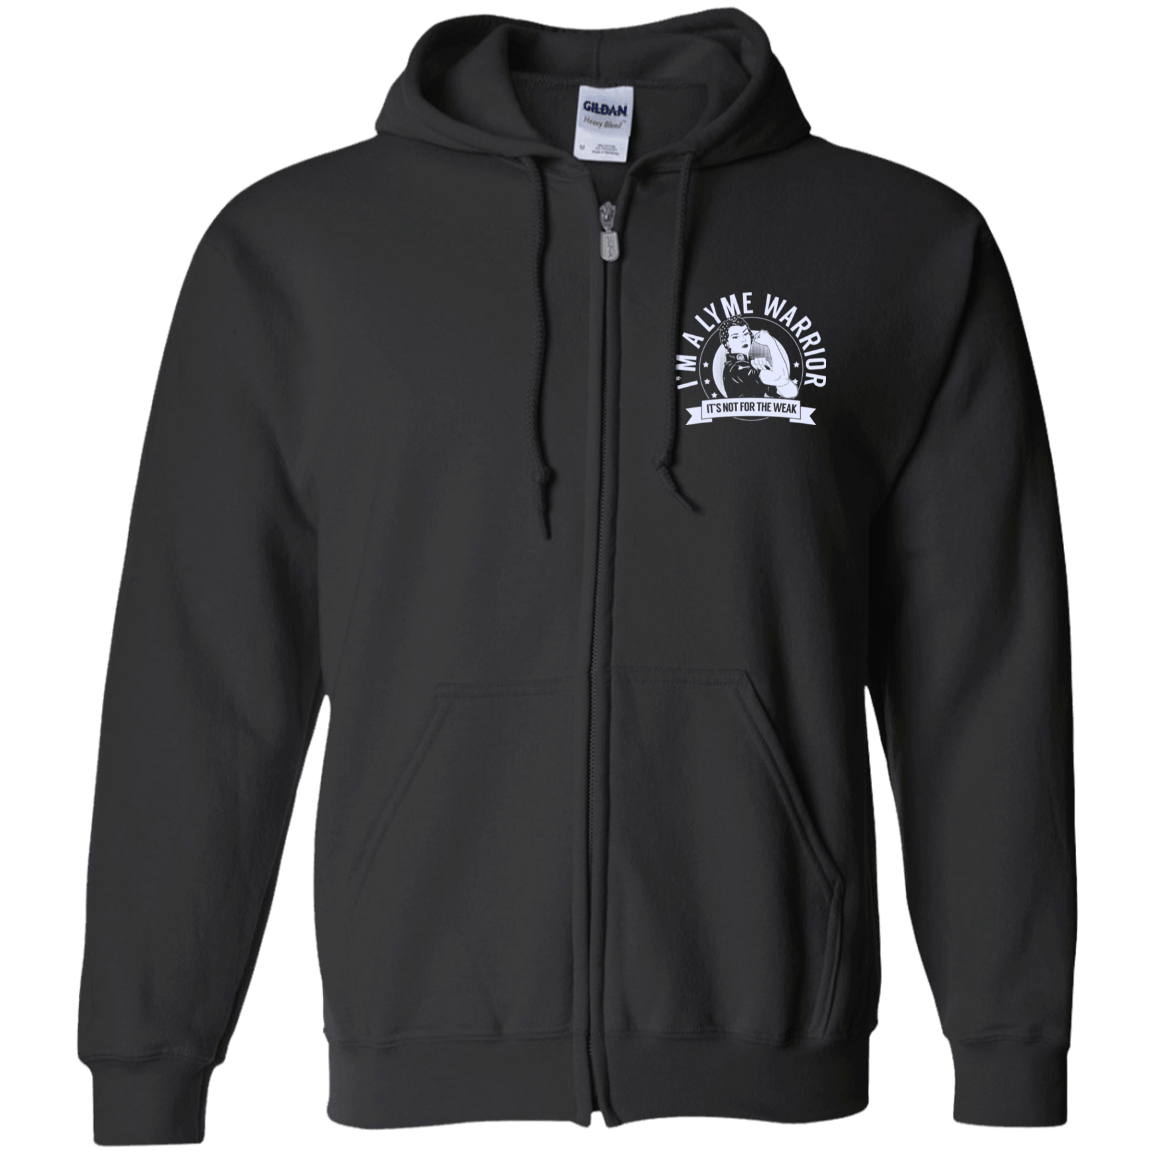 Lyme Disease - Lyme Warrior NFTW Zip Up Hooded Sweatshirt - The Unchargeables